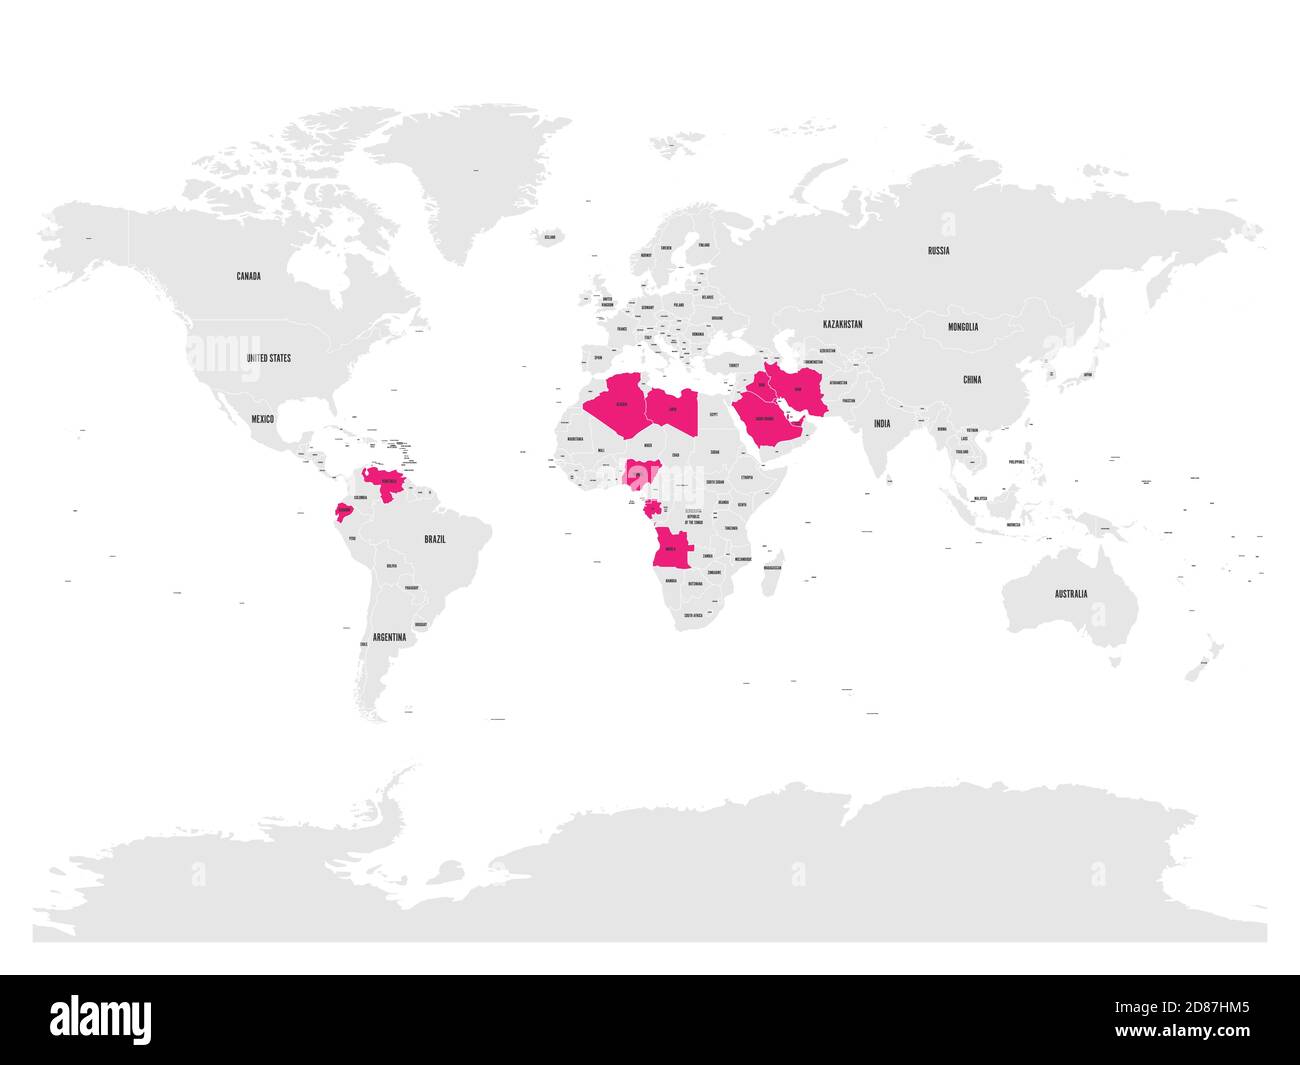 OPEC, Organisation der Erdöl exportierenden Länder. Weltkarte mit rosa hervorgehobenen Mitgliedsstaaten seit 2017. Vektorgrafik. Stock Vektor